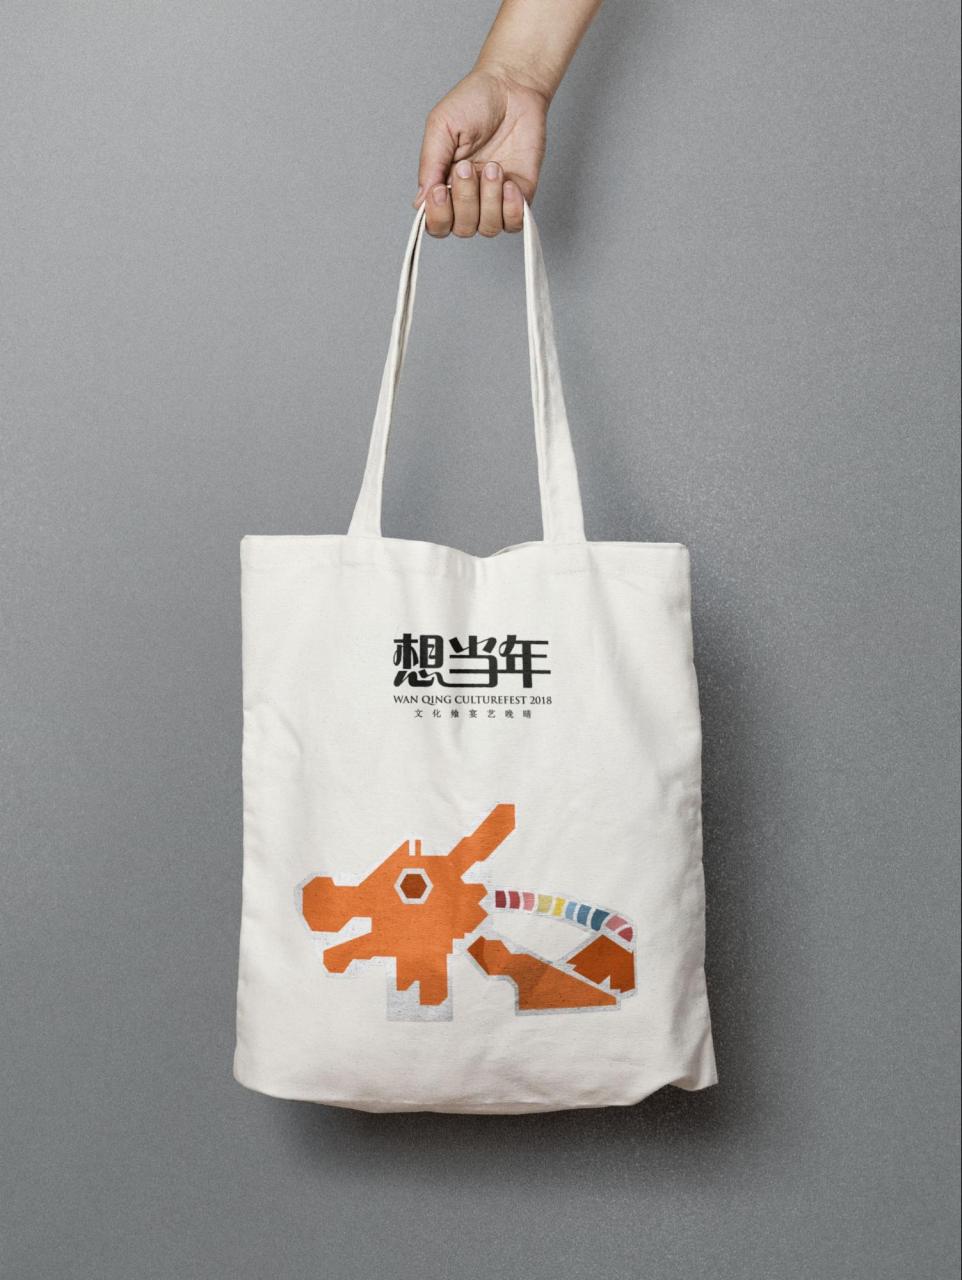 Wan Qing CultureFest 2018 - dragon playground tote bag